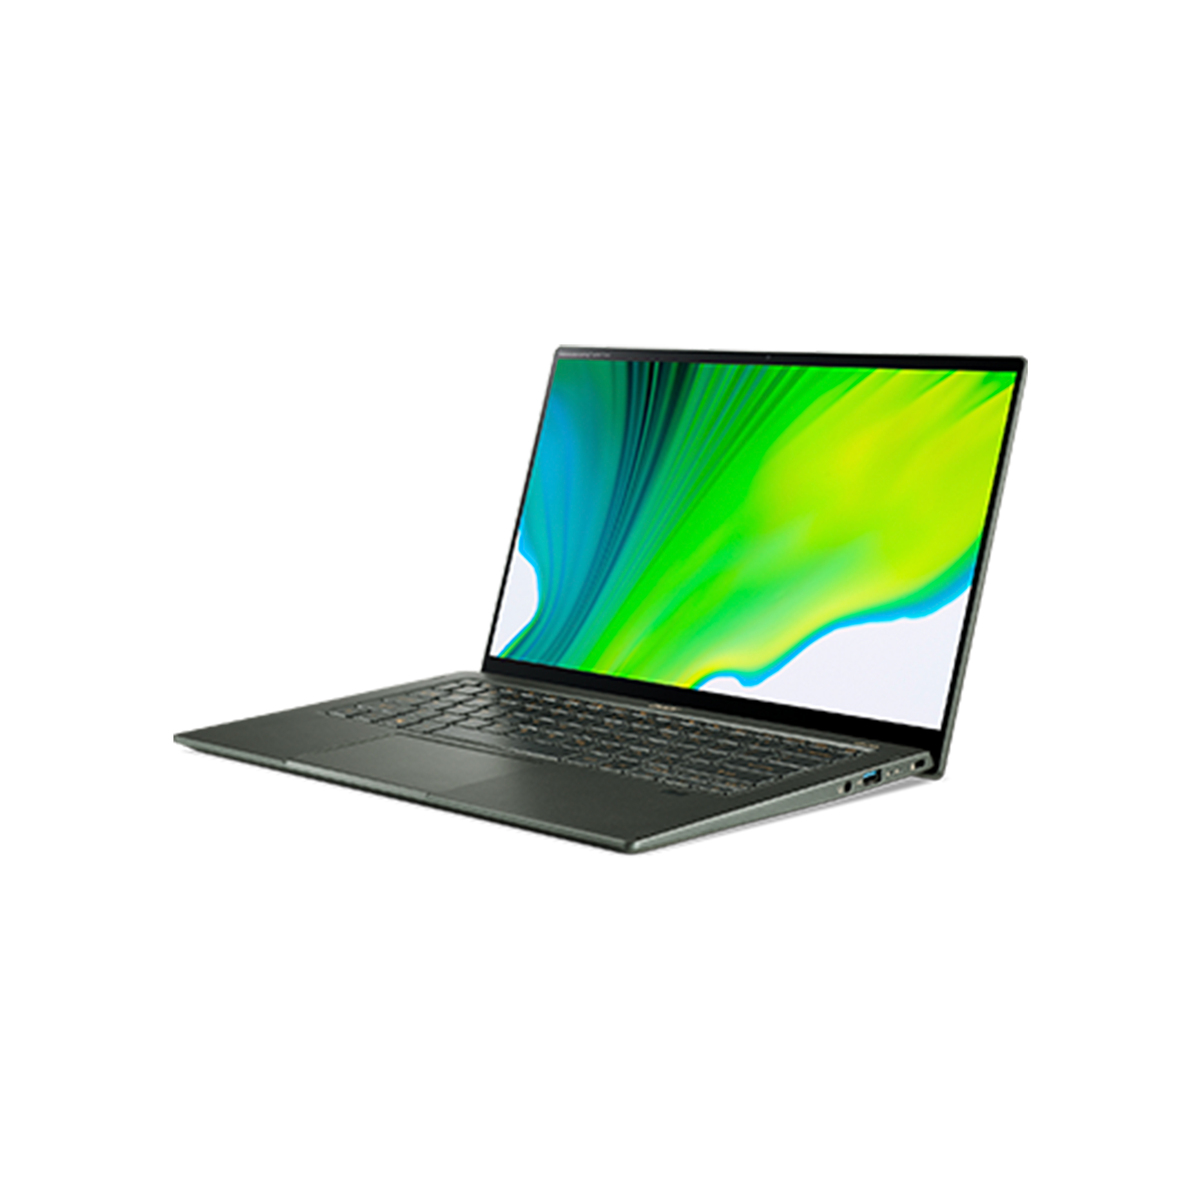 Acer Swift SF514-NXHXAEM00,Intel Core i7,16GB RAM,1TB SSD,2GB MX 350 VGA,14"FHD IPS Touch,Windows 10,Mist Green